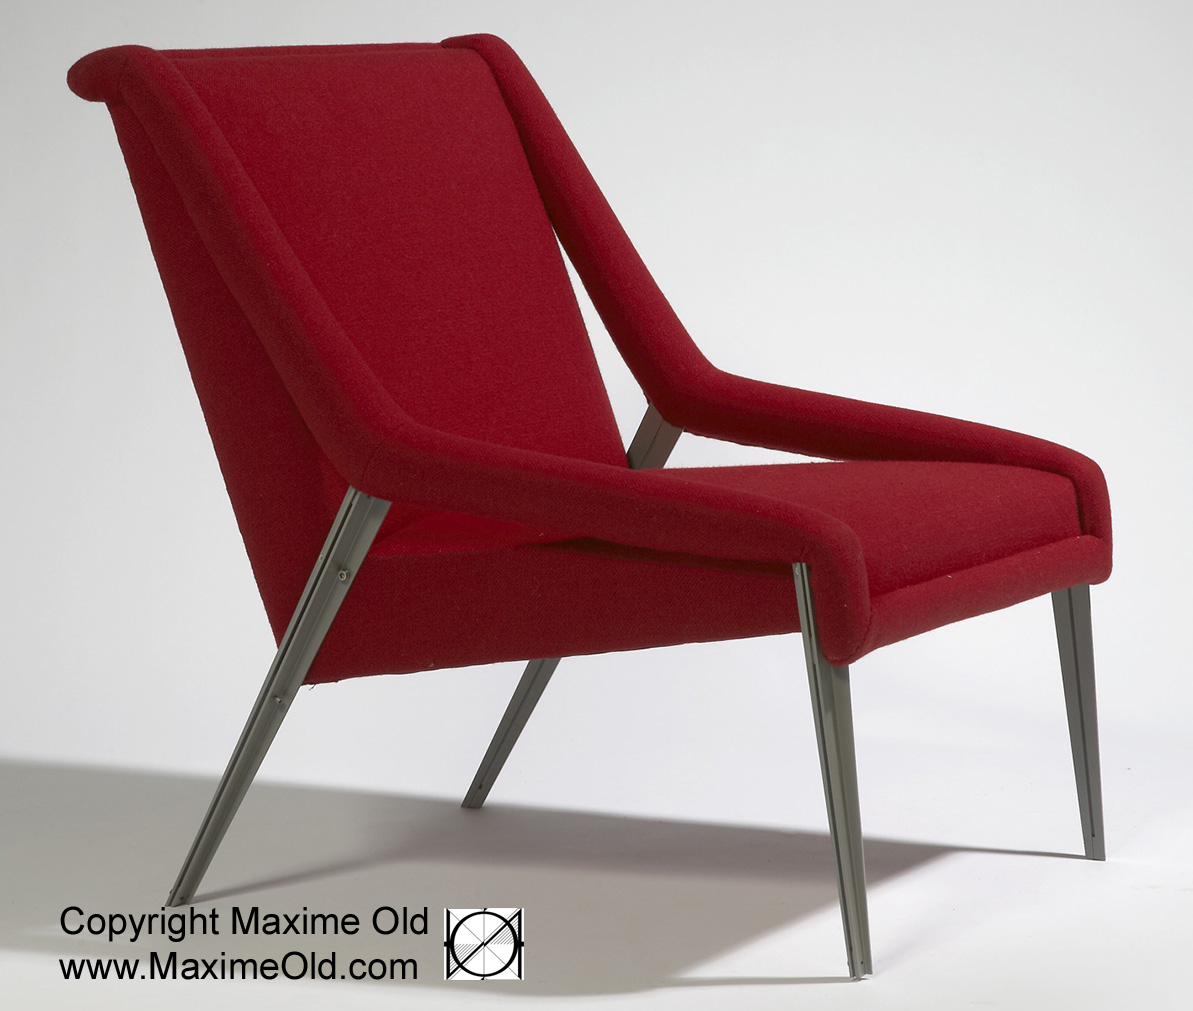 Paquebot France Light Armchair: Maxime Old, Modern Art Furniture Designer